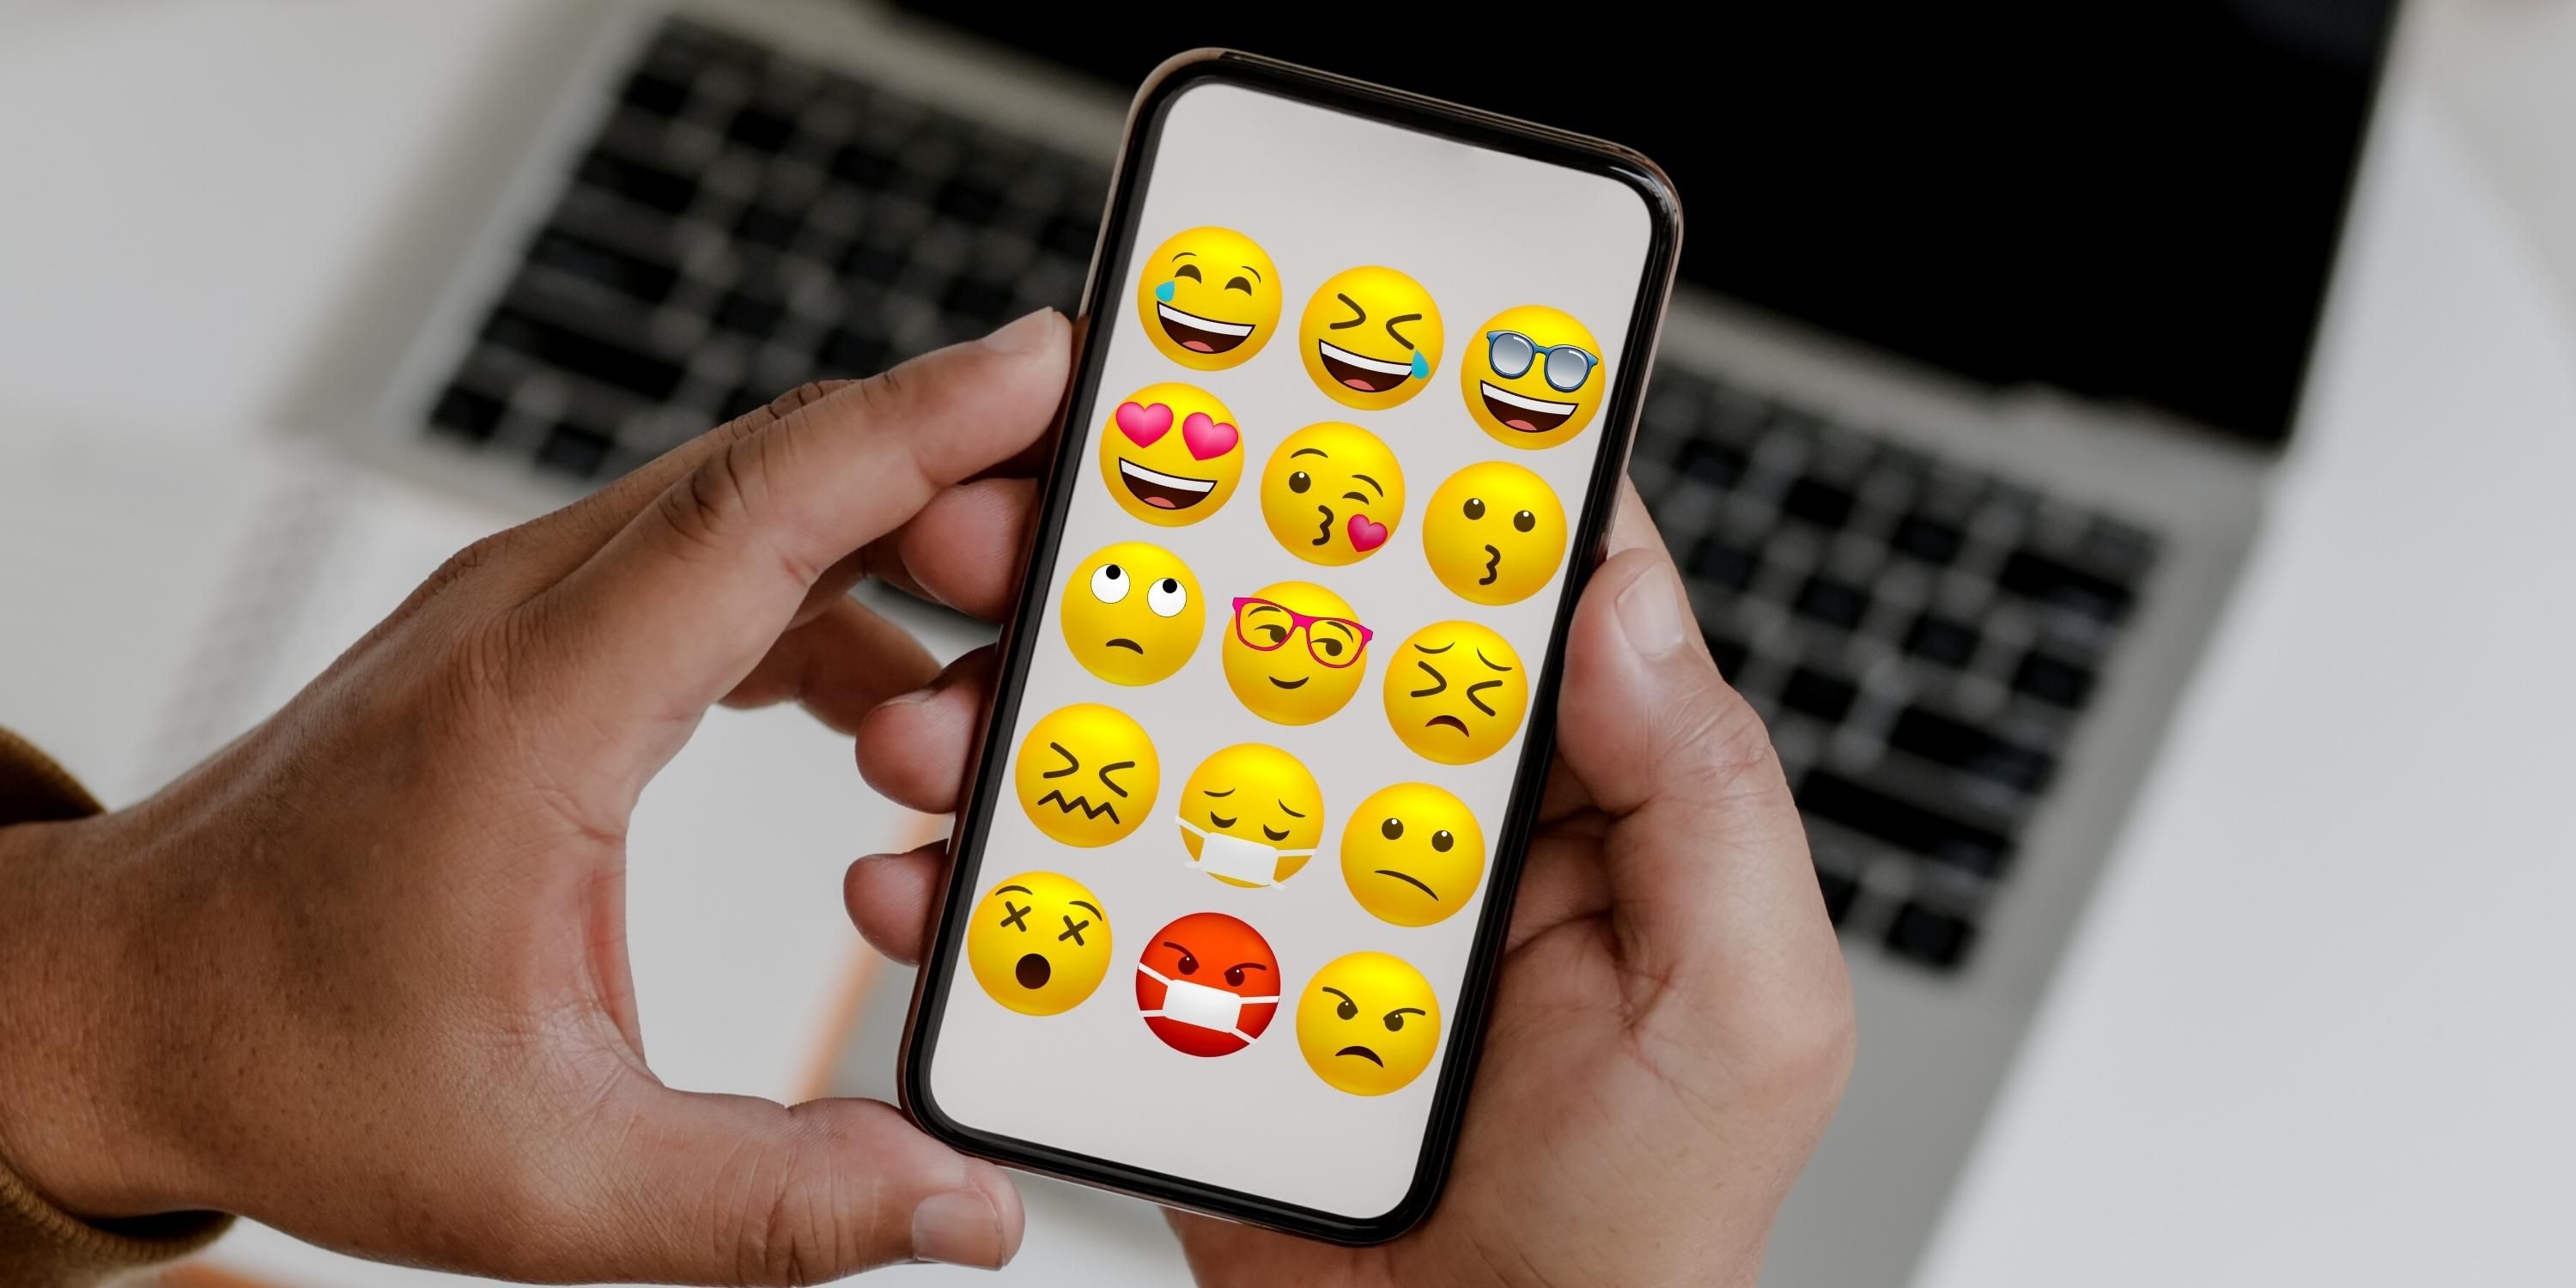 How Do I Add Emojis To My Phone